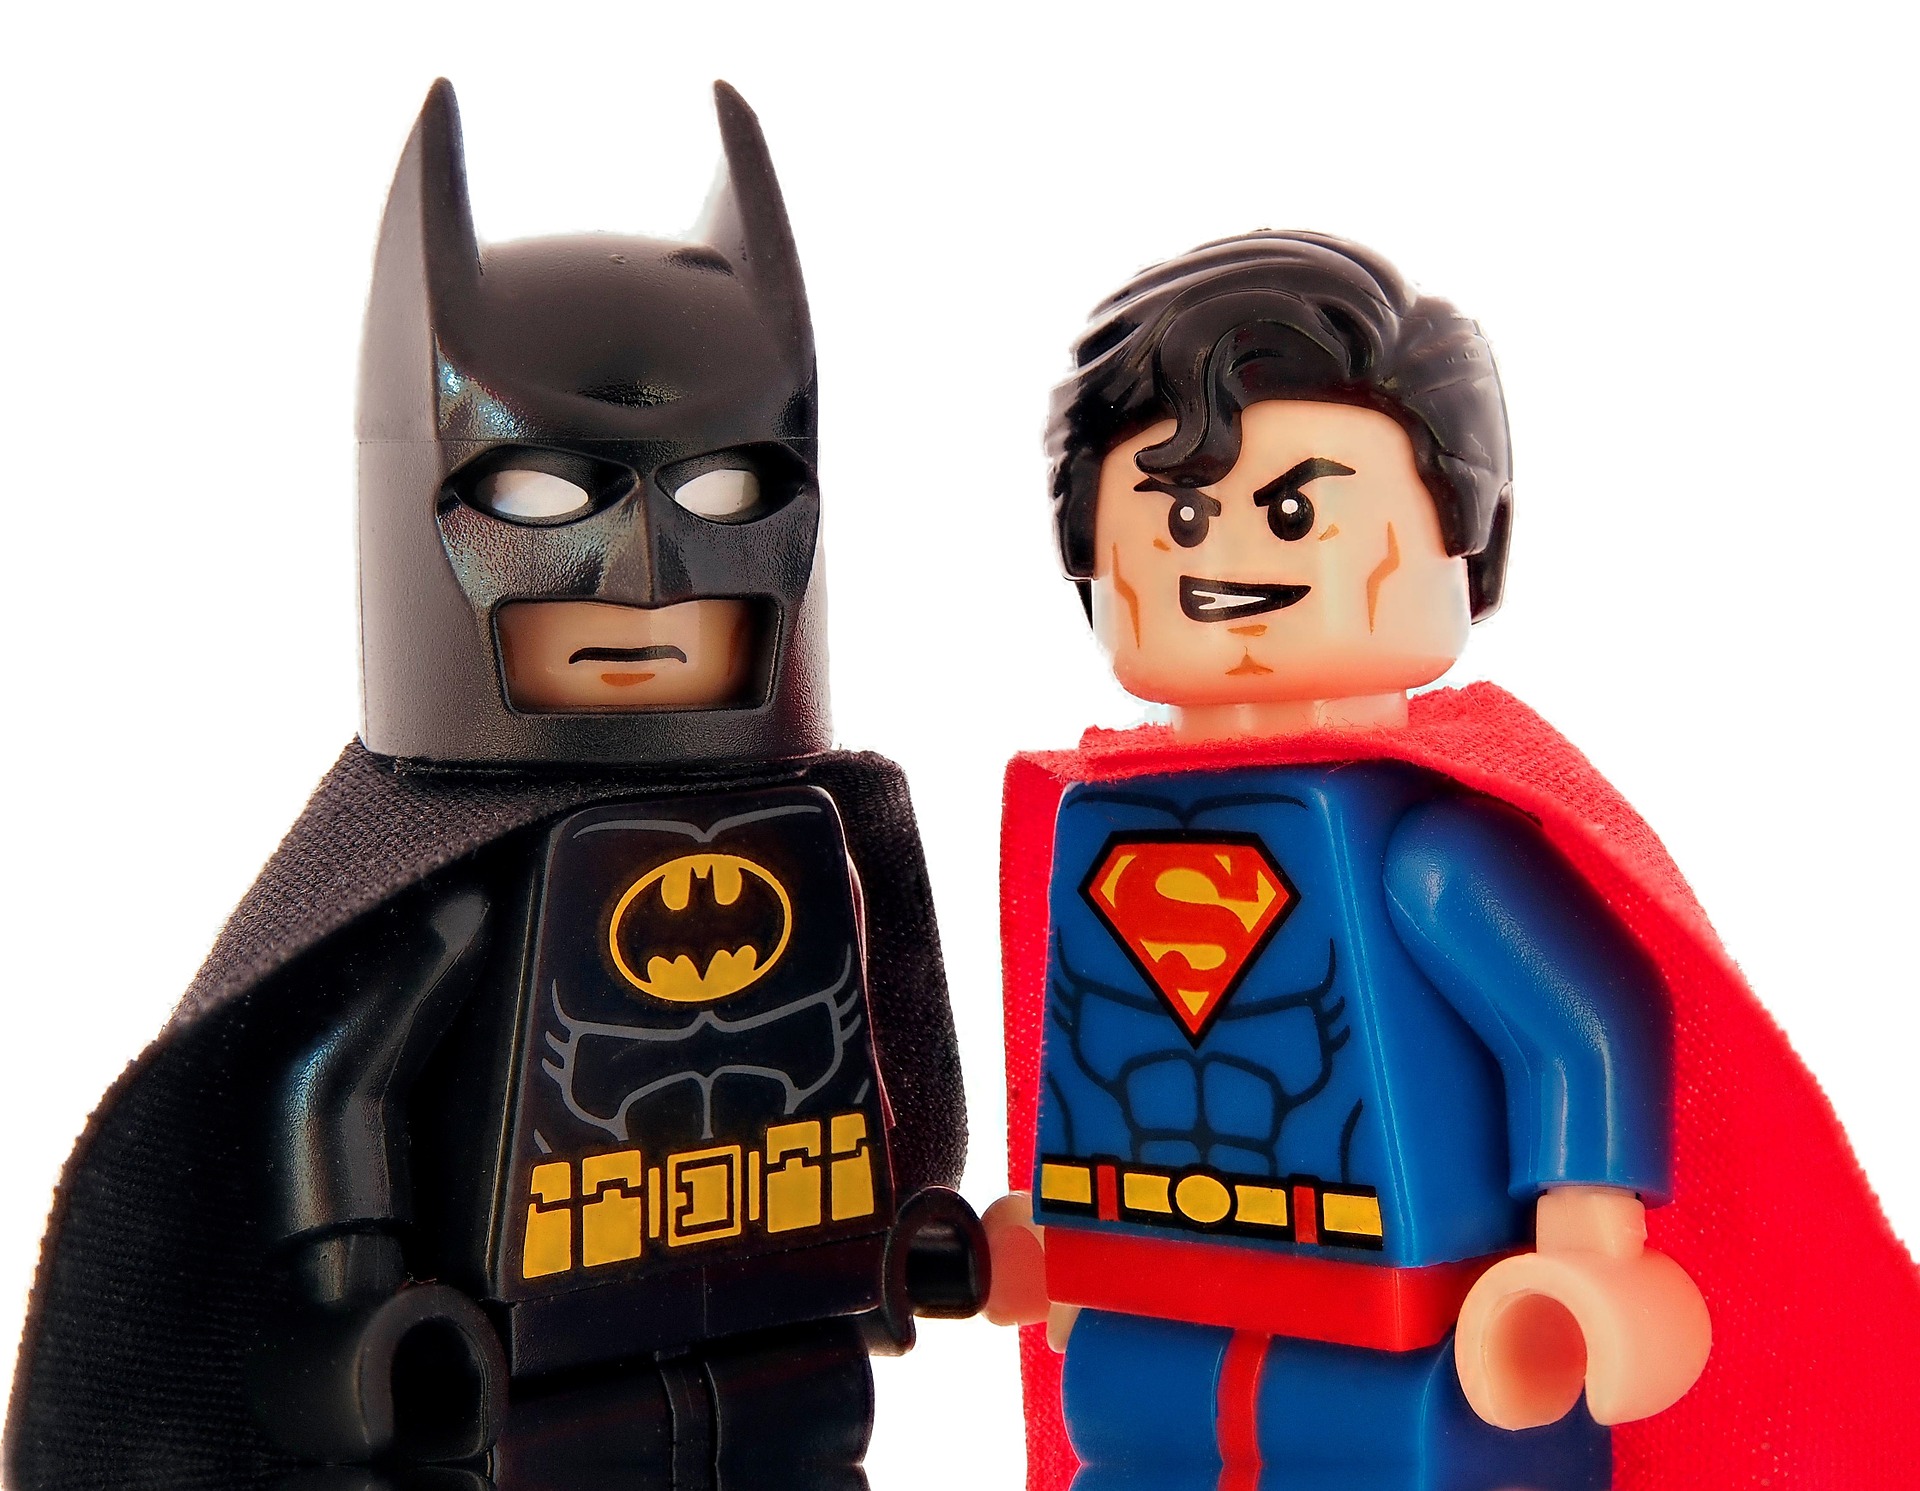 Lego Batman and Lego Superman